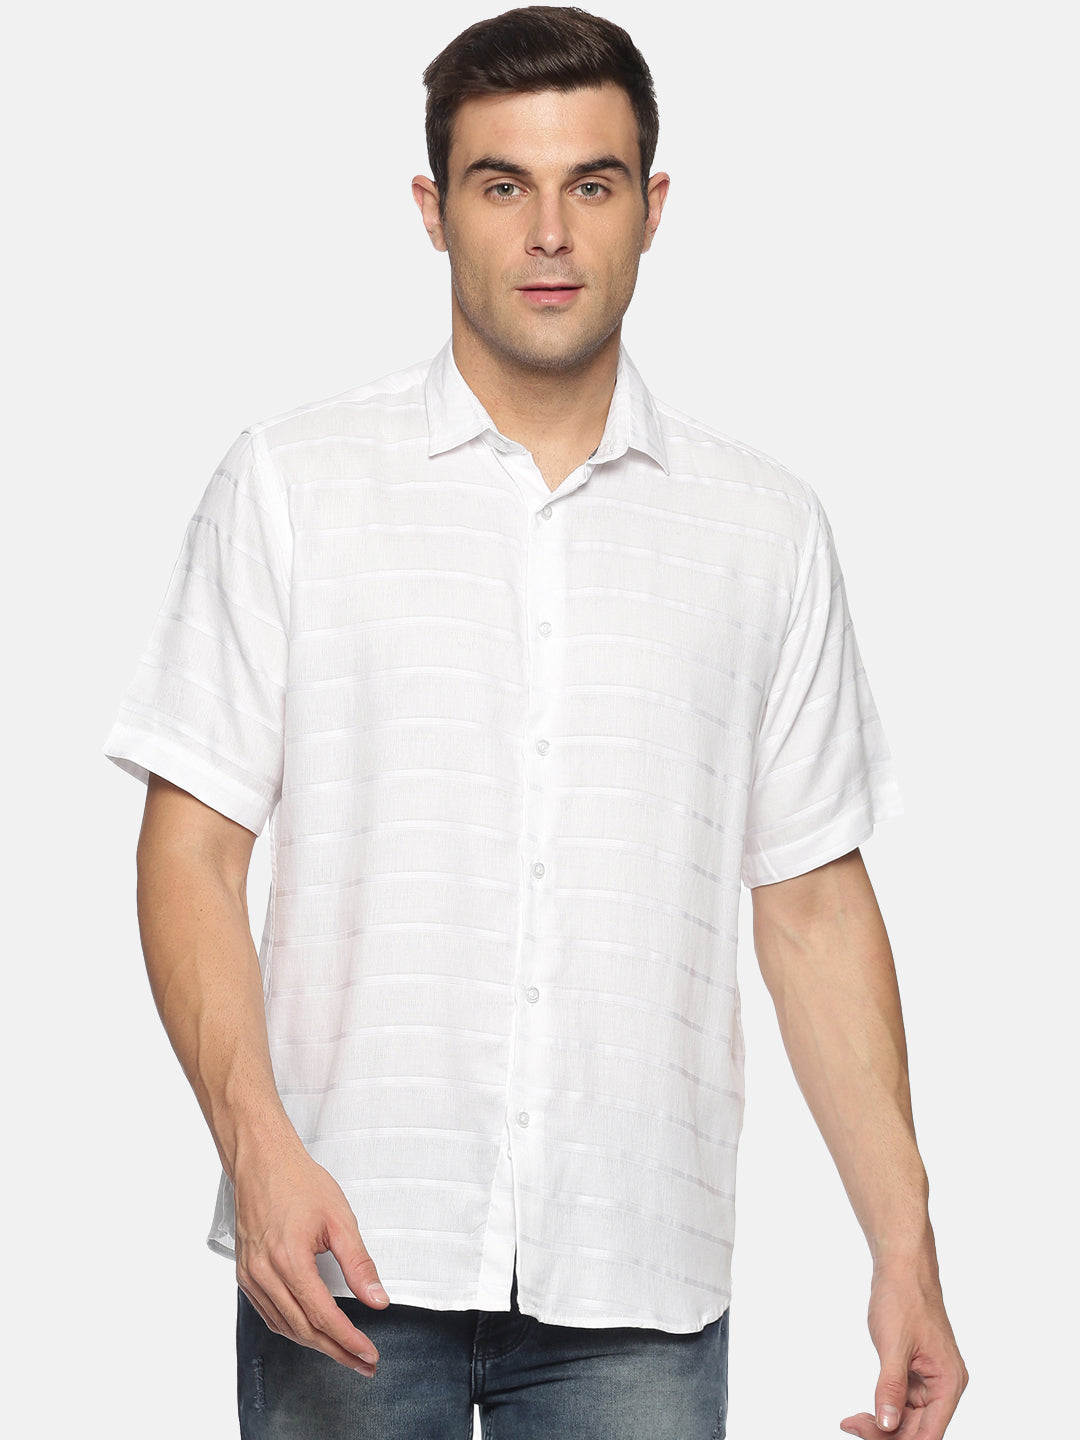 Don Vino Men's White Half Sleeve Casual Shirt